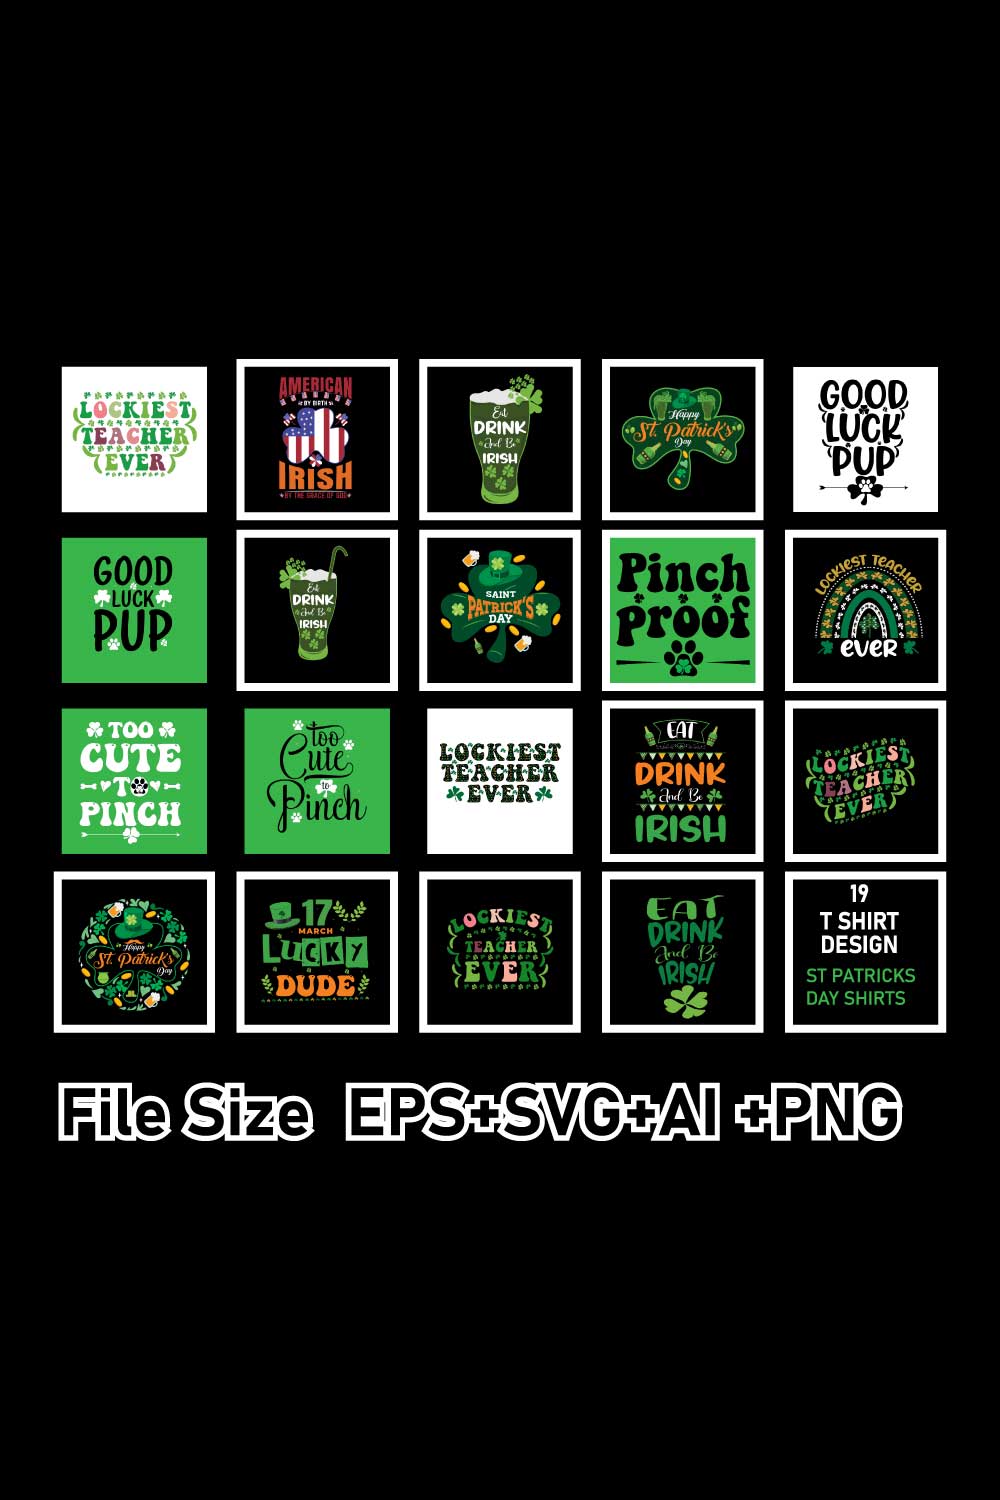 19 st patricks day shirts bundle svg / eps / Ai /PNG pinterest preview image.